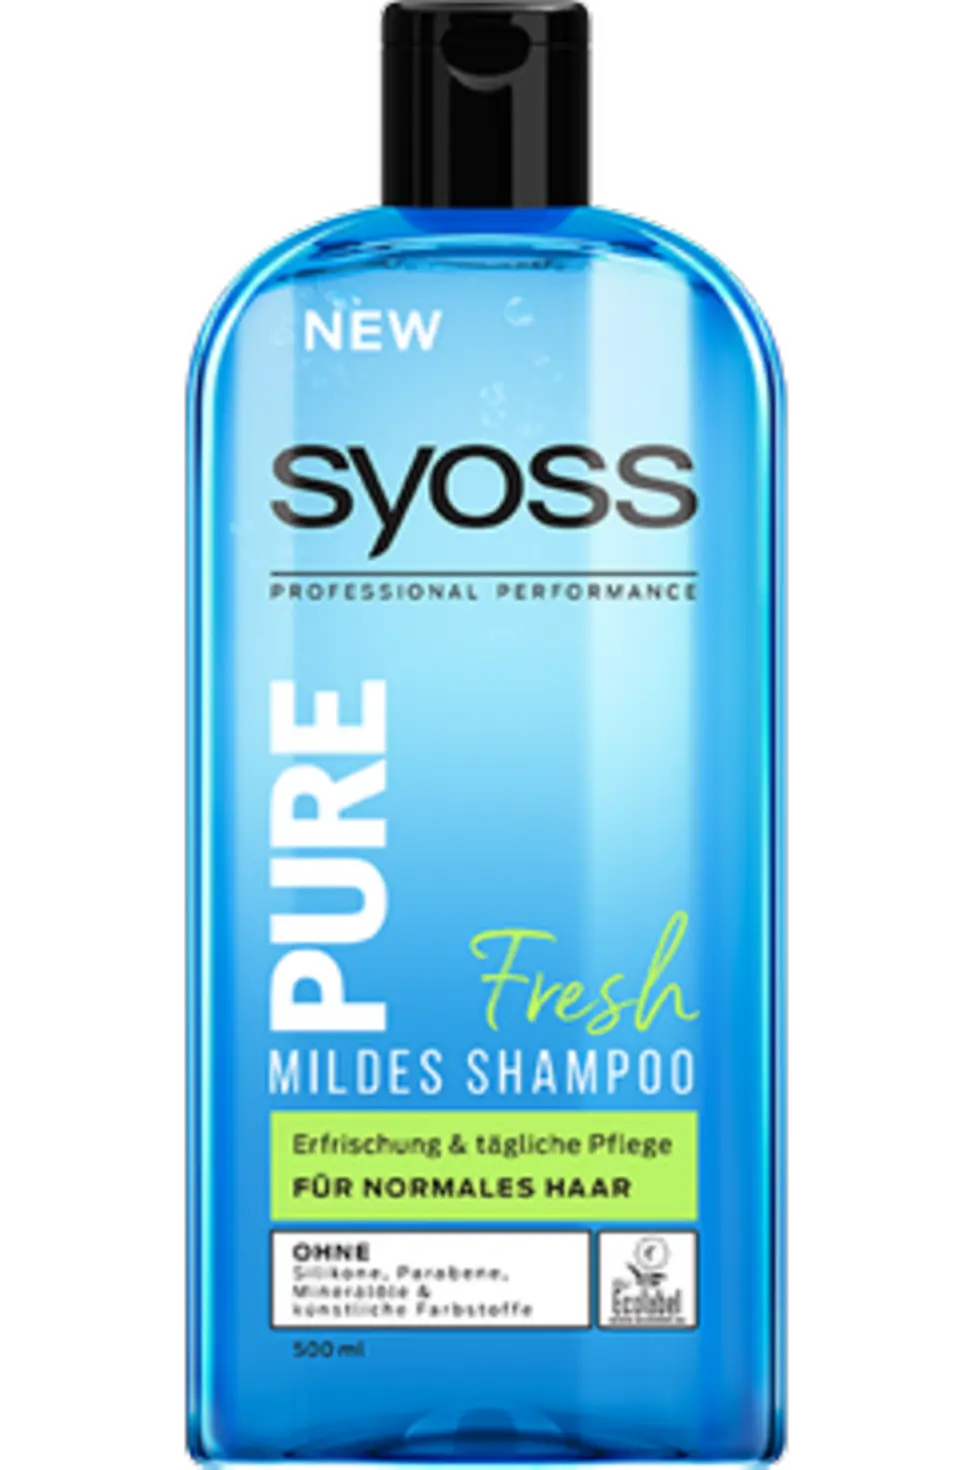 Syoss Pure Fresh Shampoo